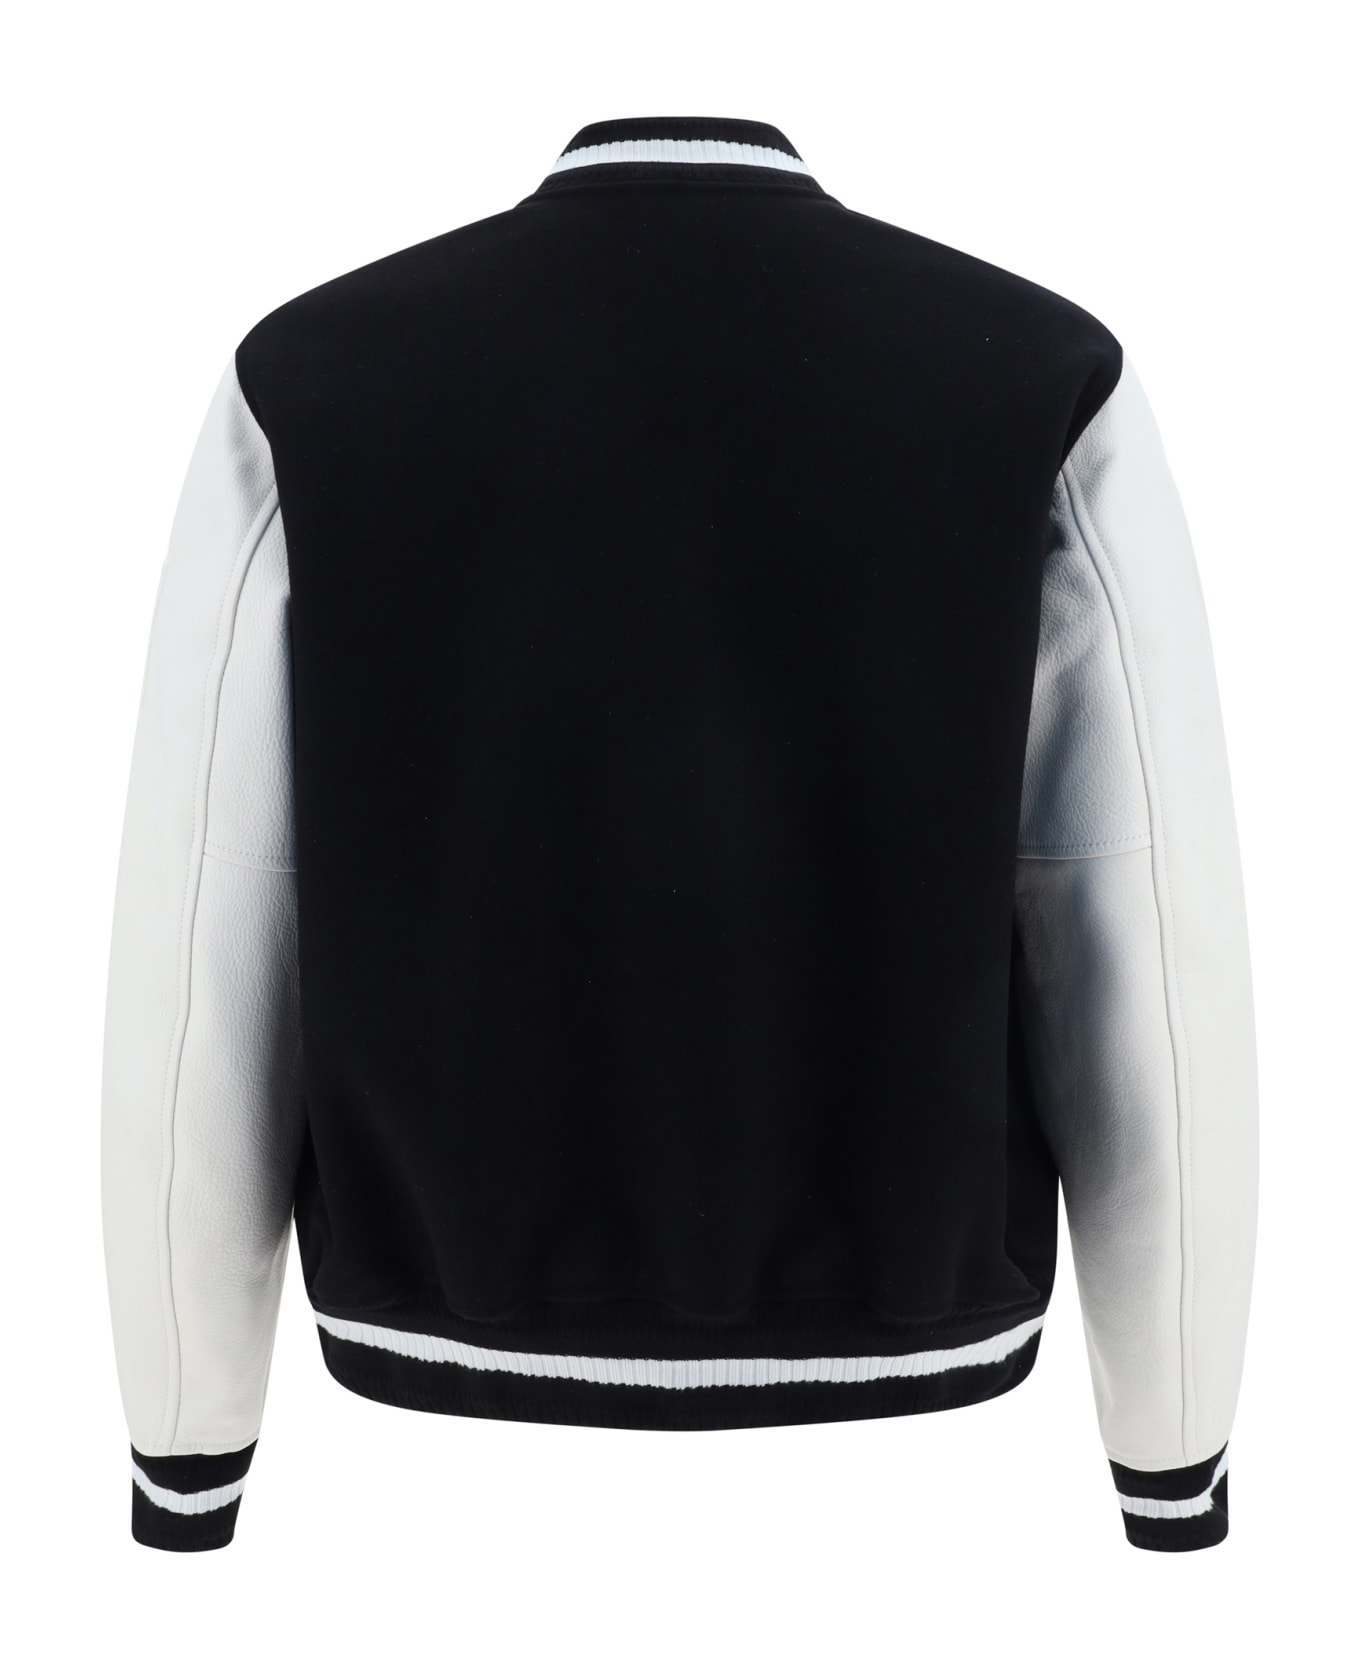 Givenchy Varsity Bomber Jacket - Black/white